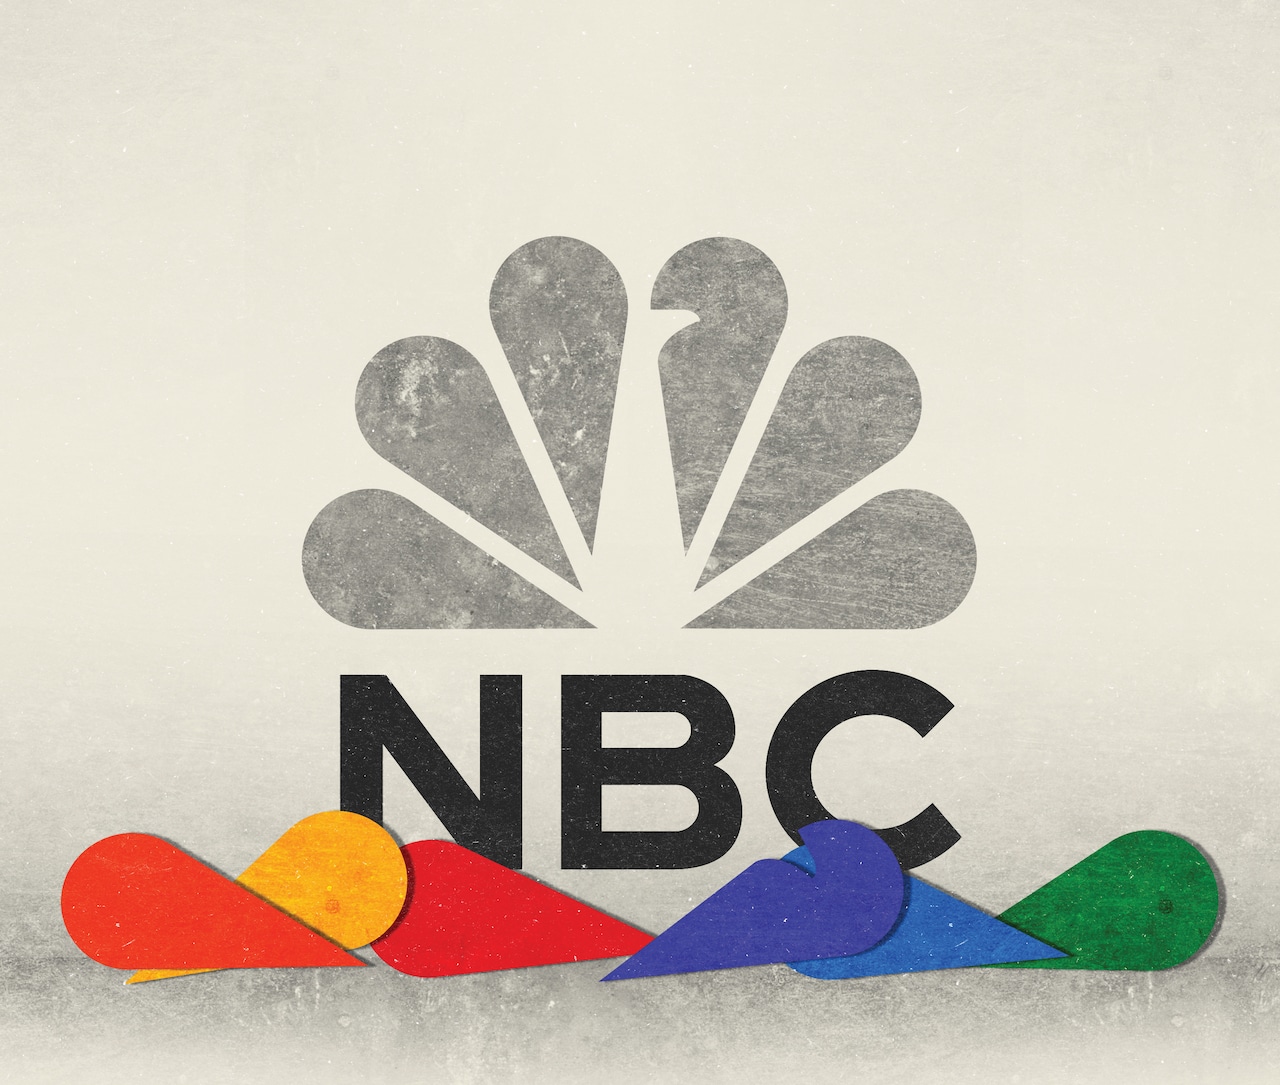 NBC should not have fired Ronna McDaniel: Richard M. Perloff [Video]